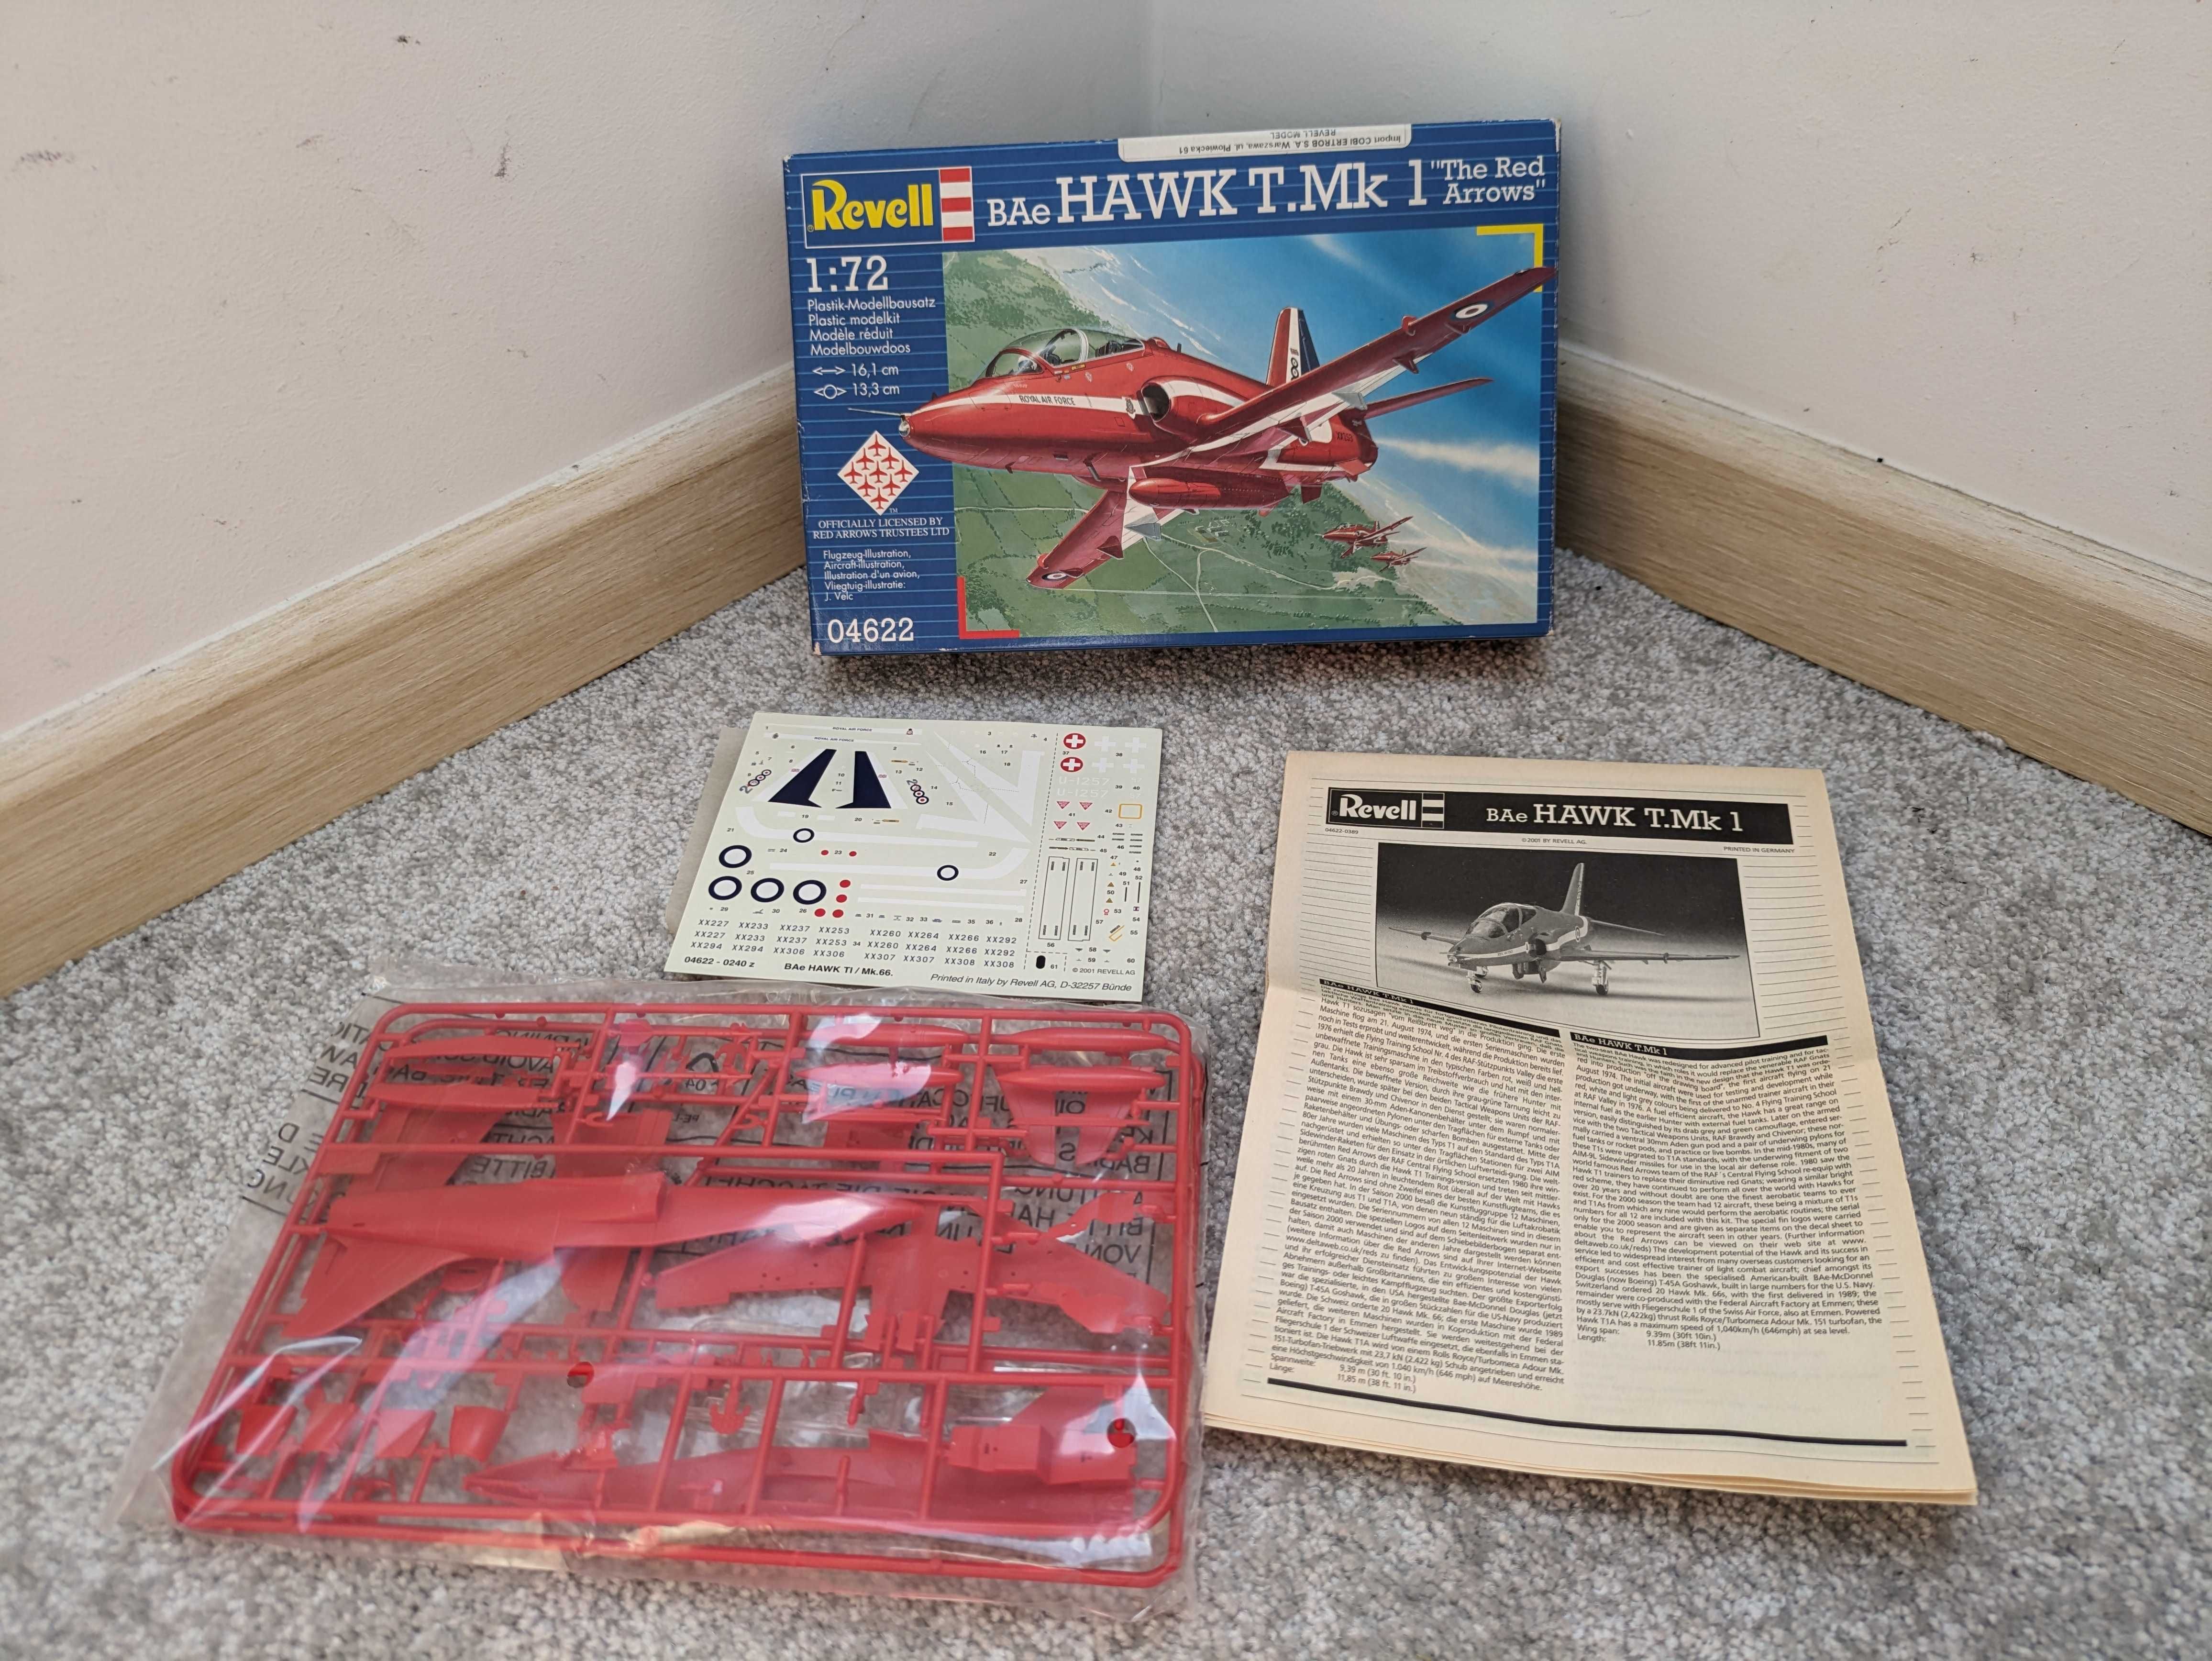 Model samolotu Revell BAe Hawk Mk. T "Red Arrows" 1:72